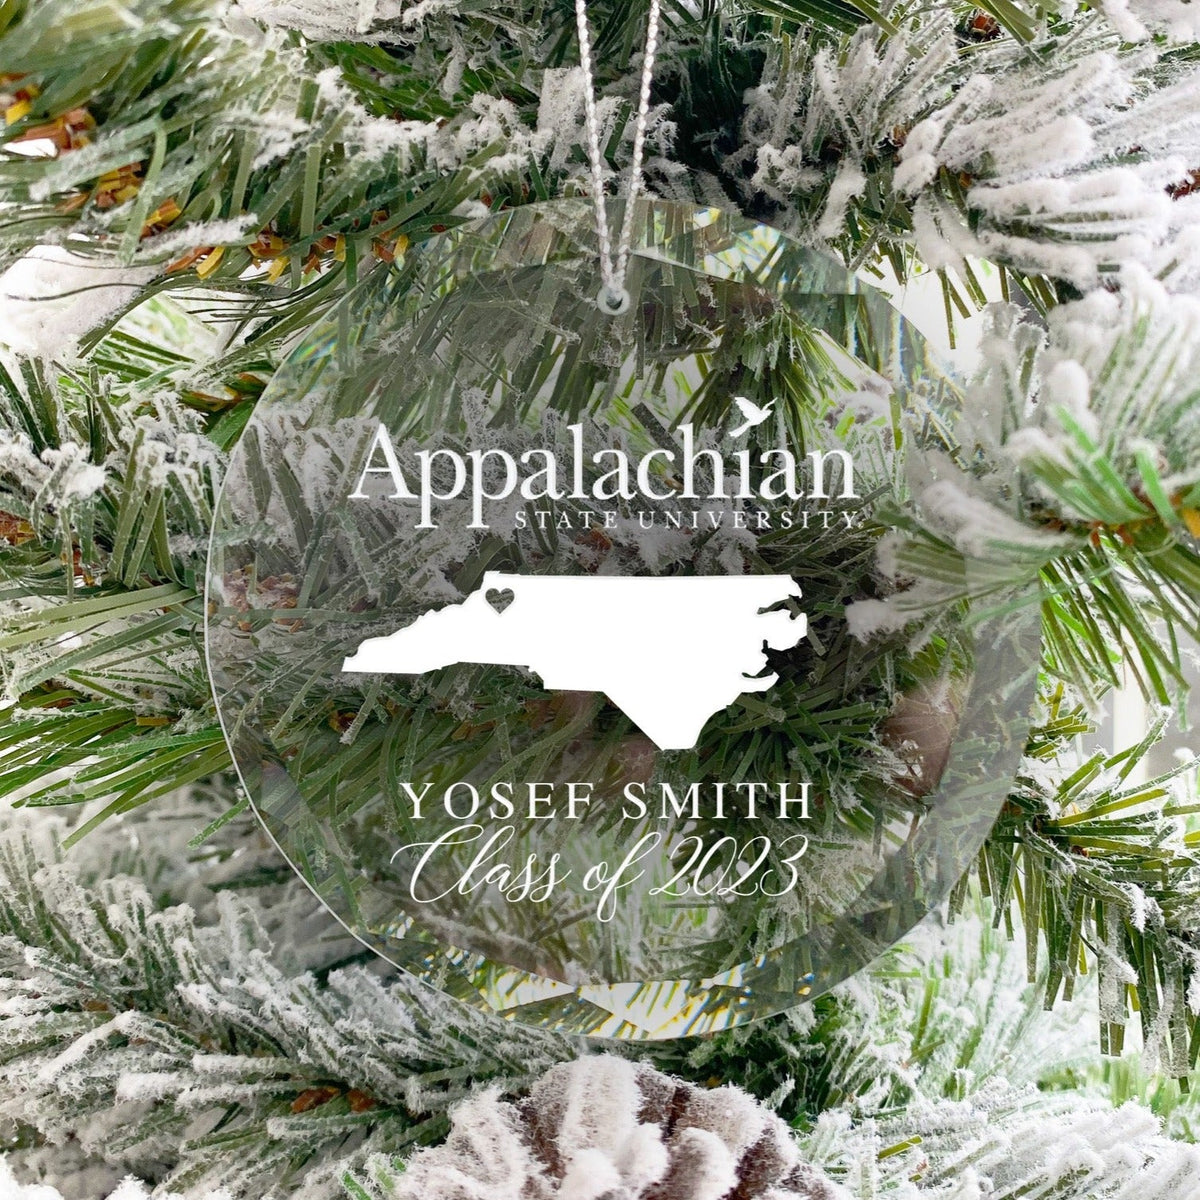 Appalachian State Glass Ornament